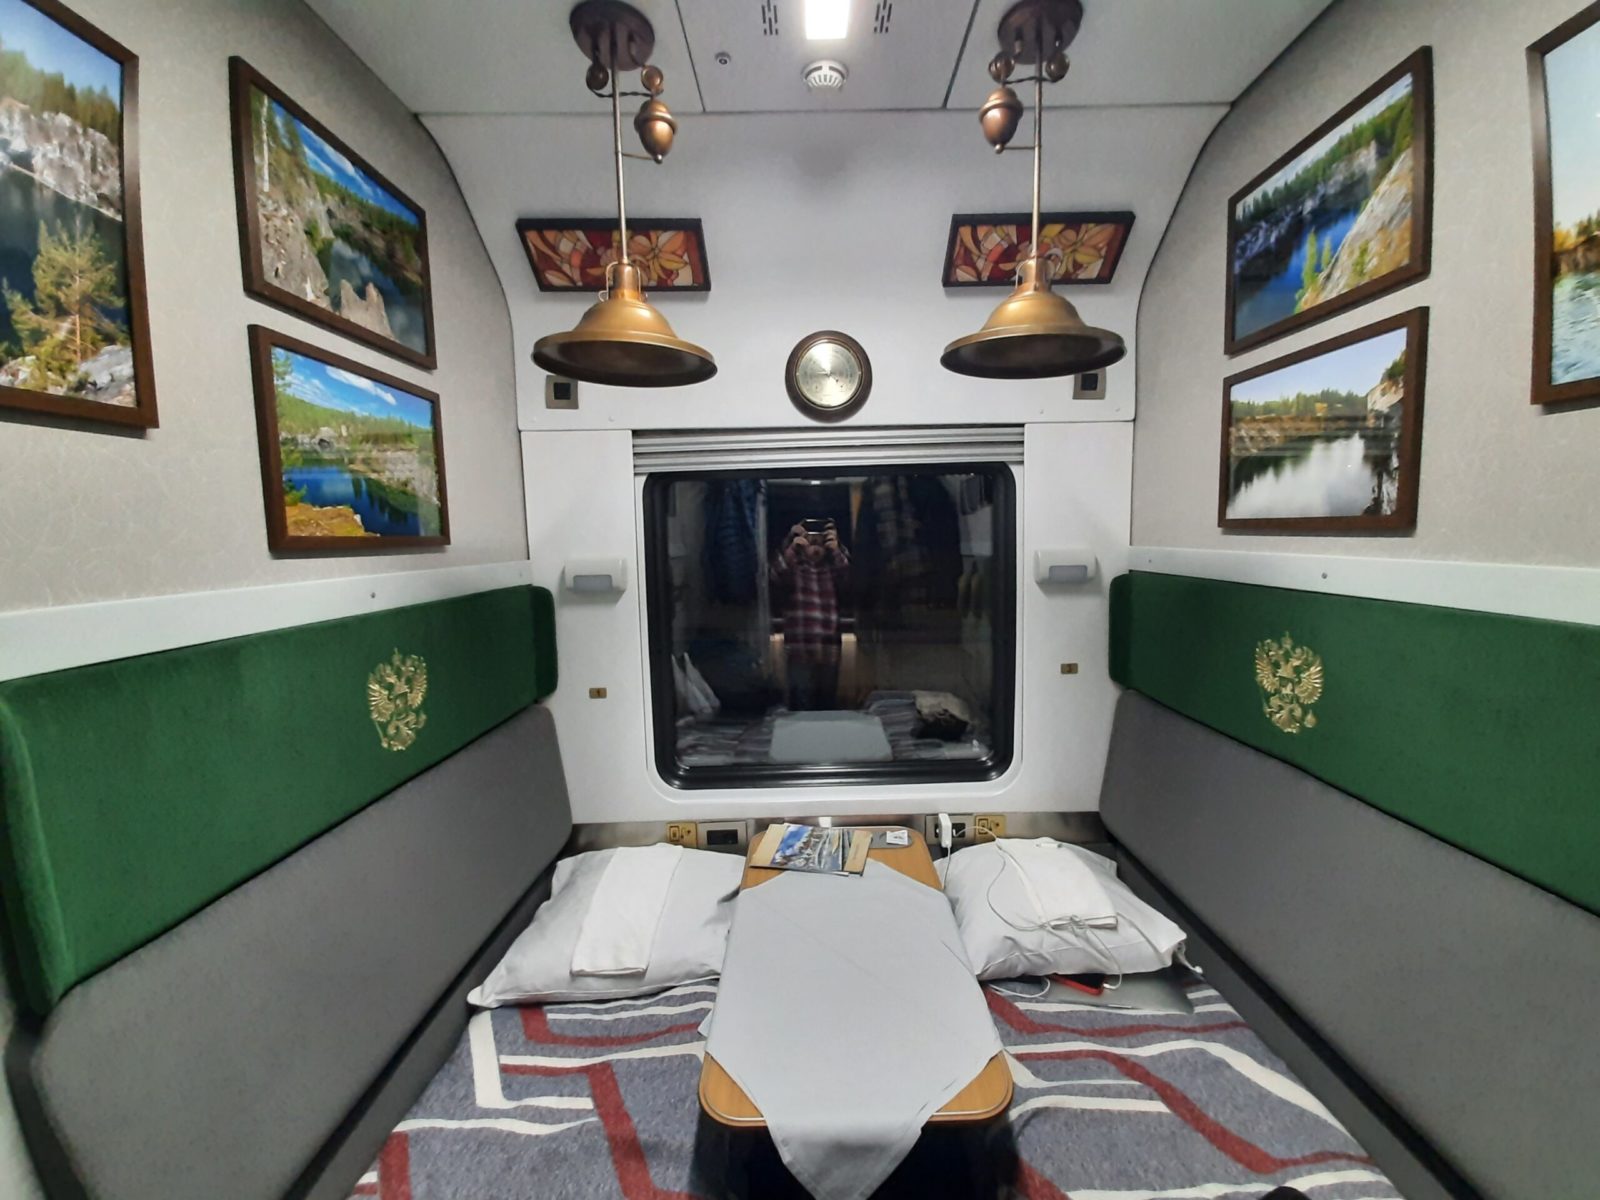 поезд 160а петрозаводск москва